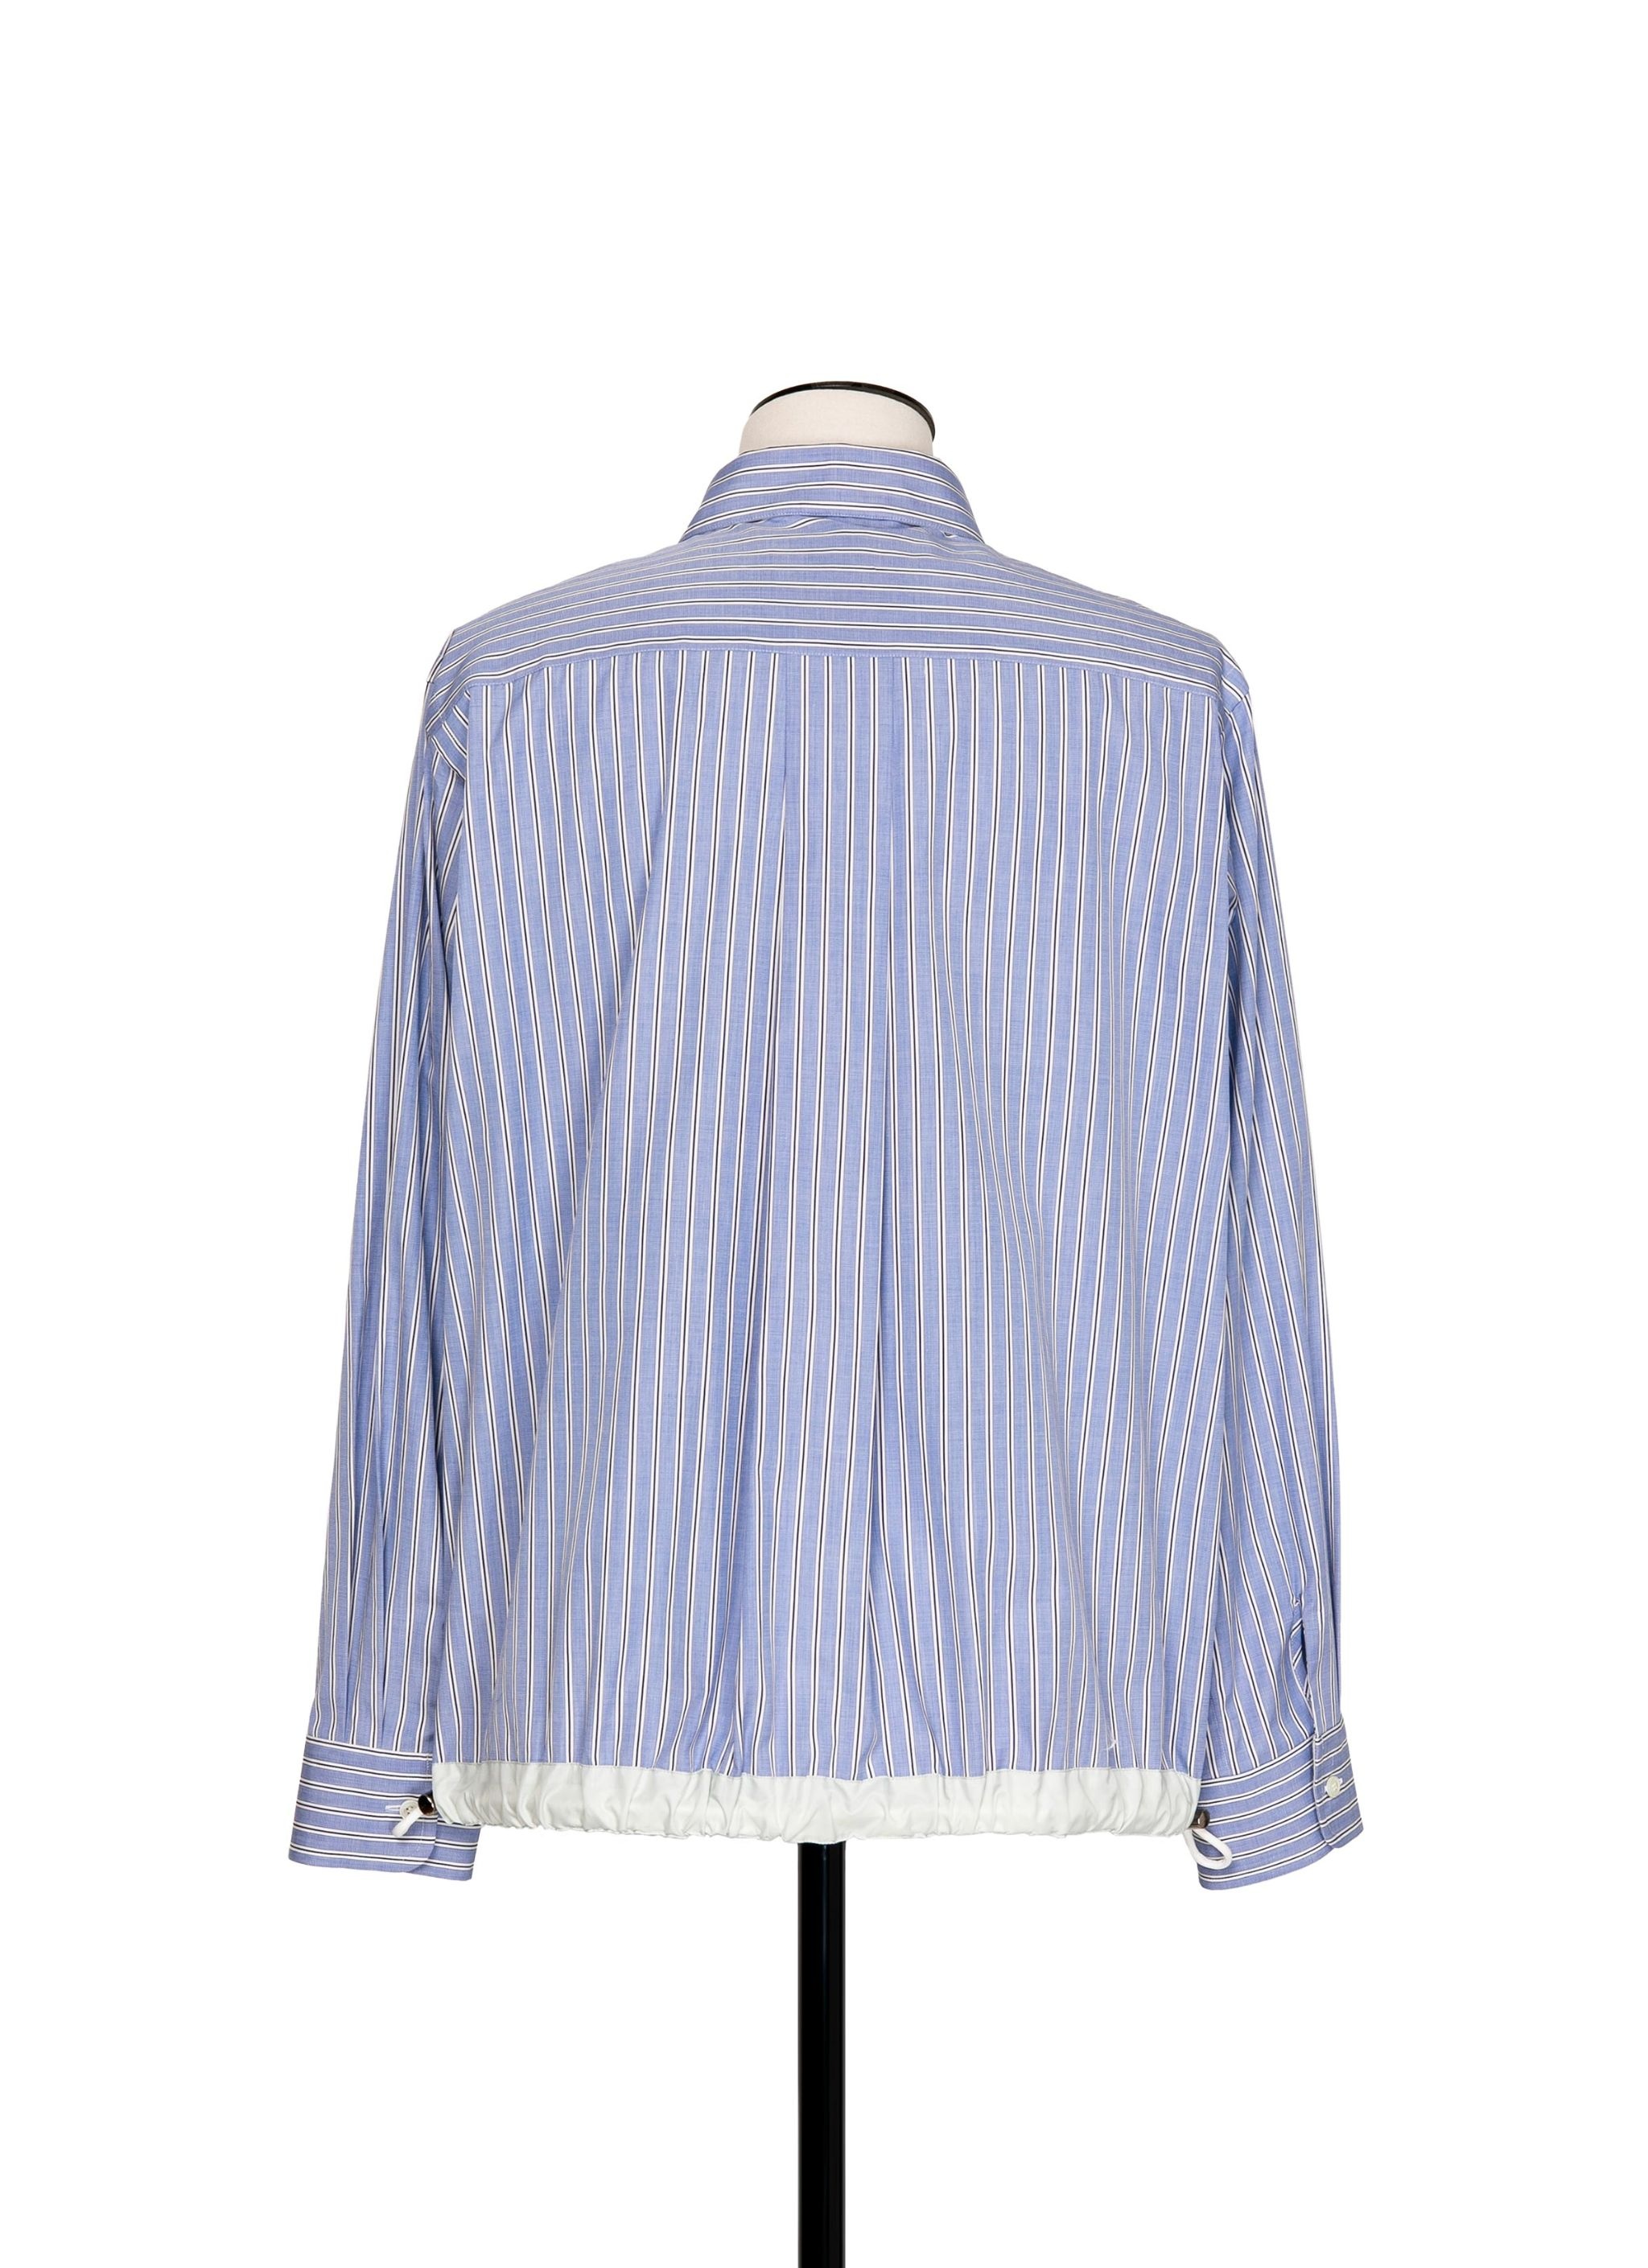 Thomas Mason s Cotton Poplin Shirt - 3